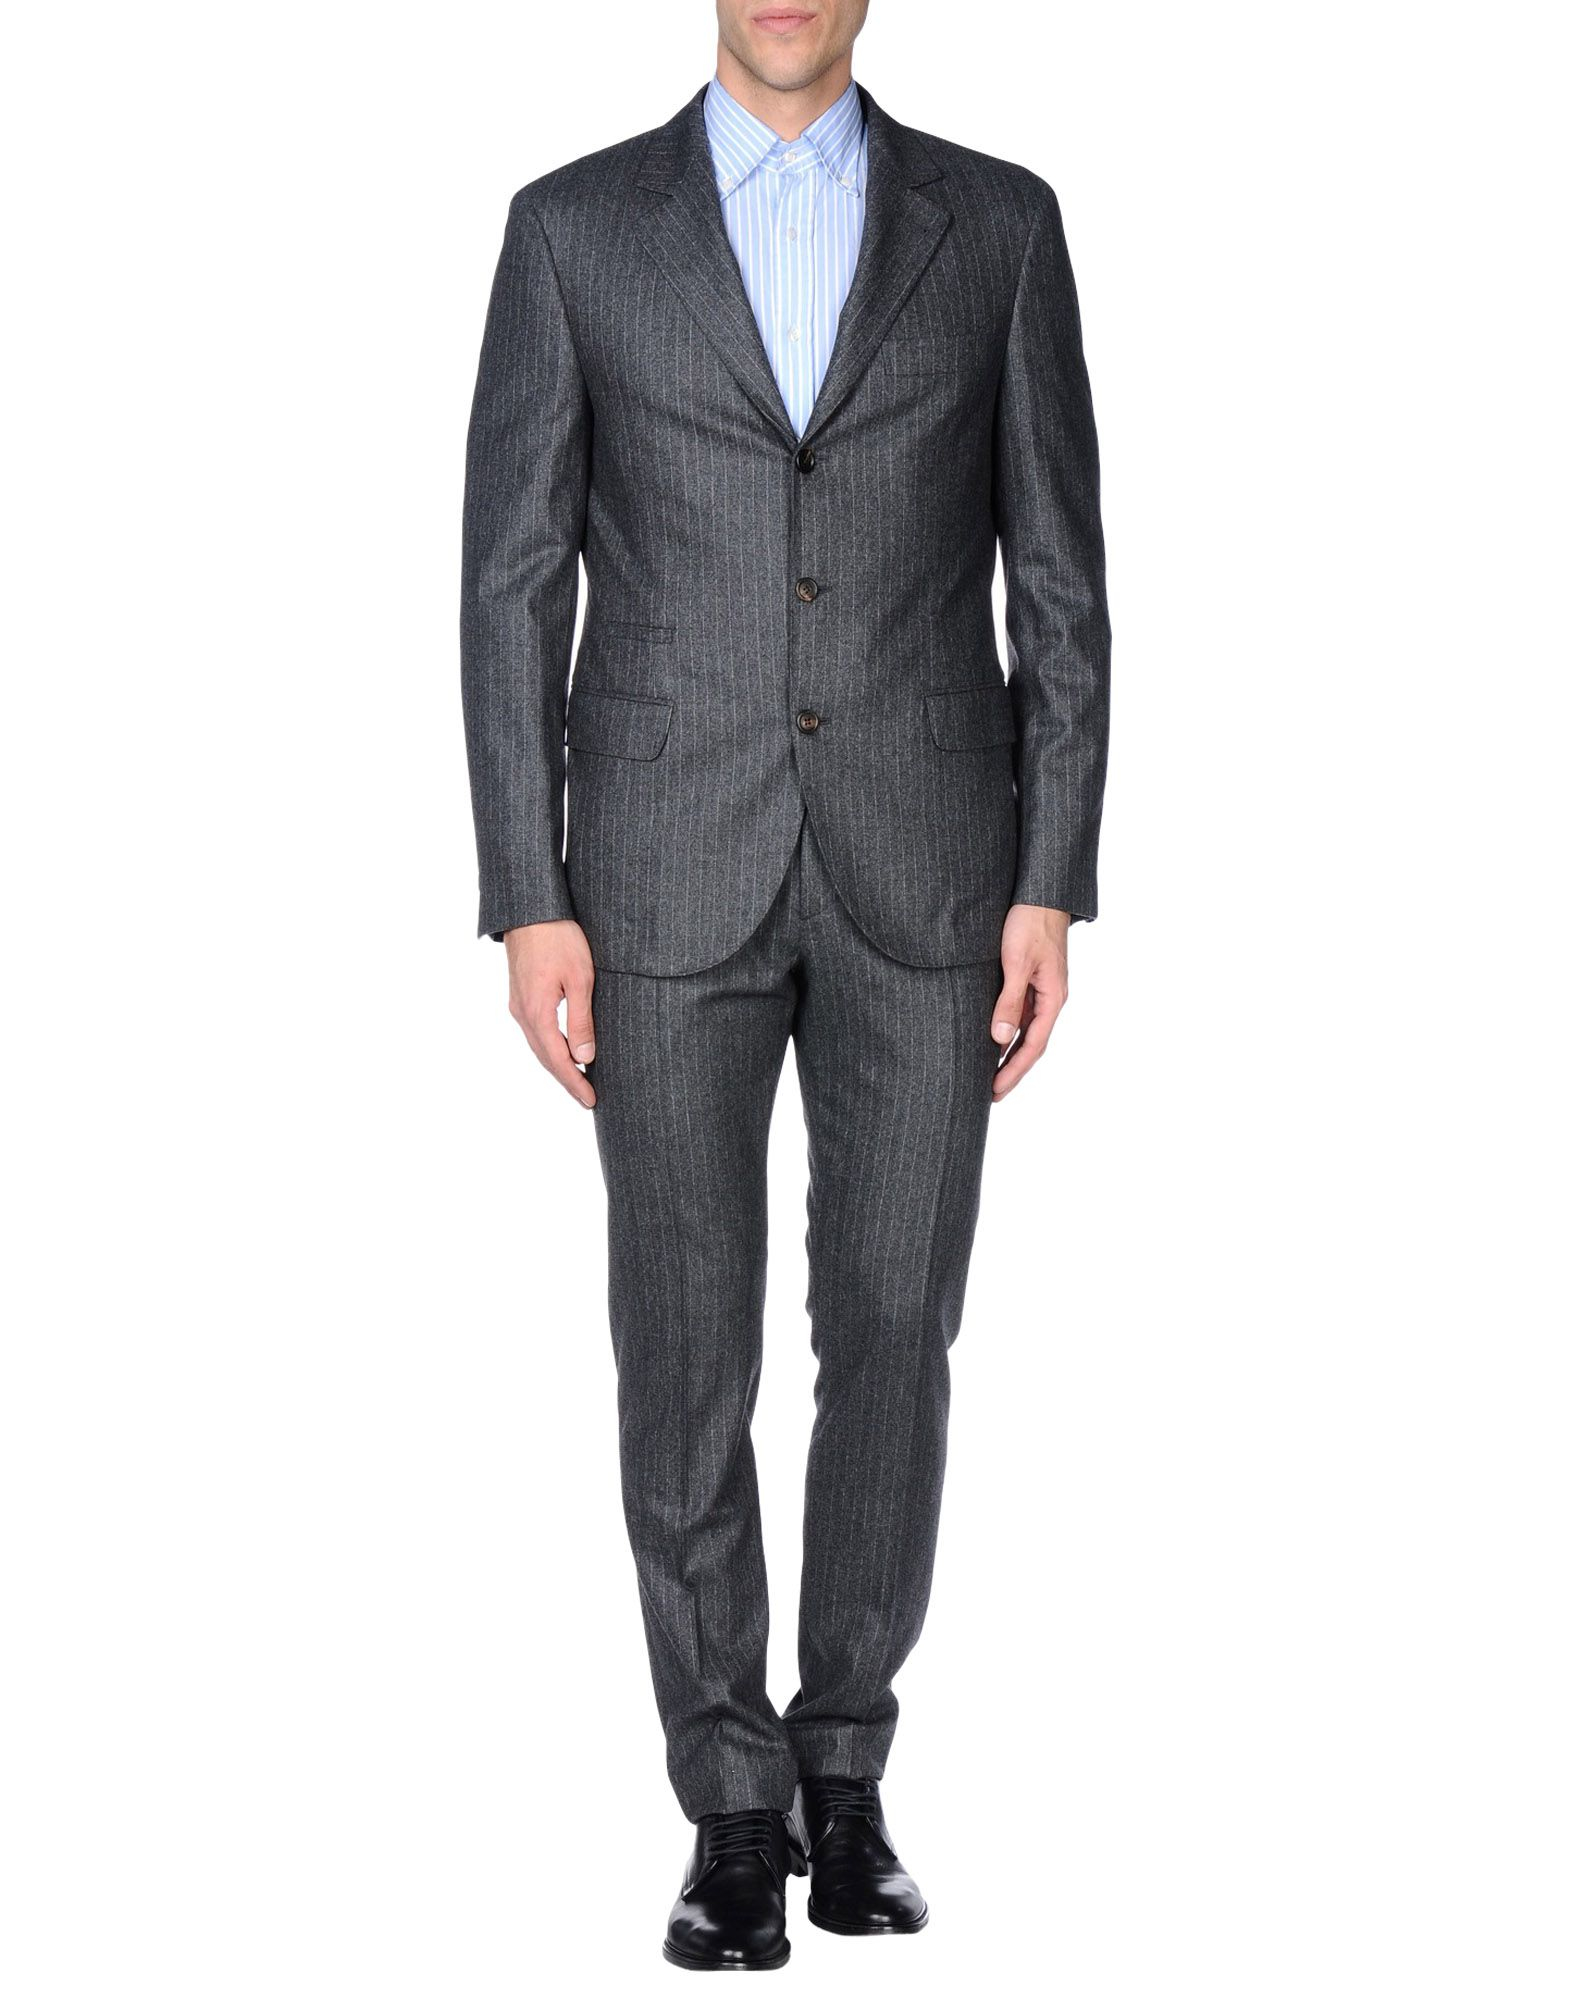 Lyst - Brunello Cucinelli Suit in Gray for Men